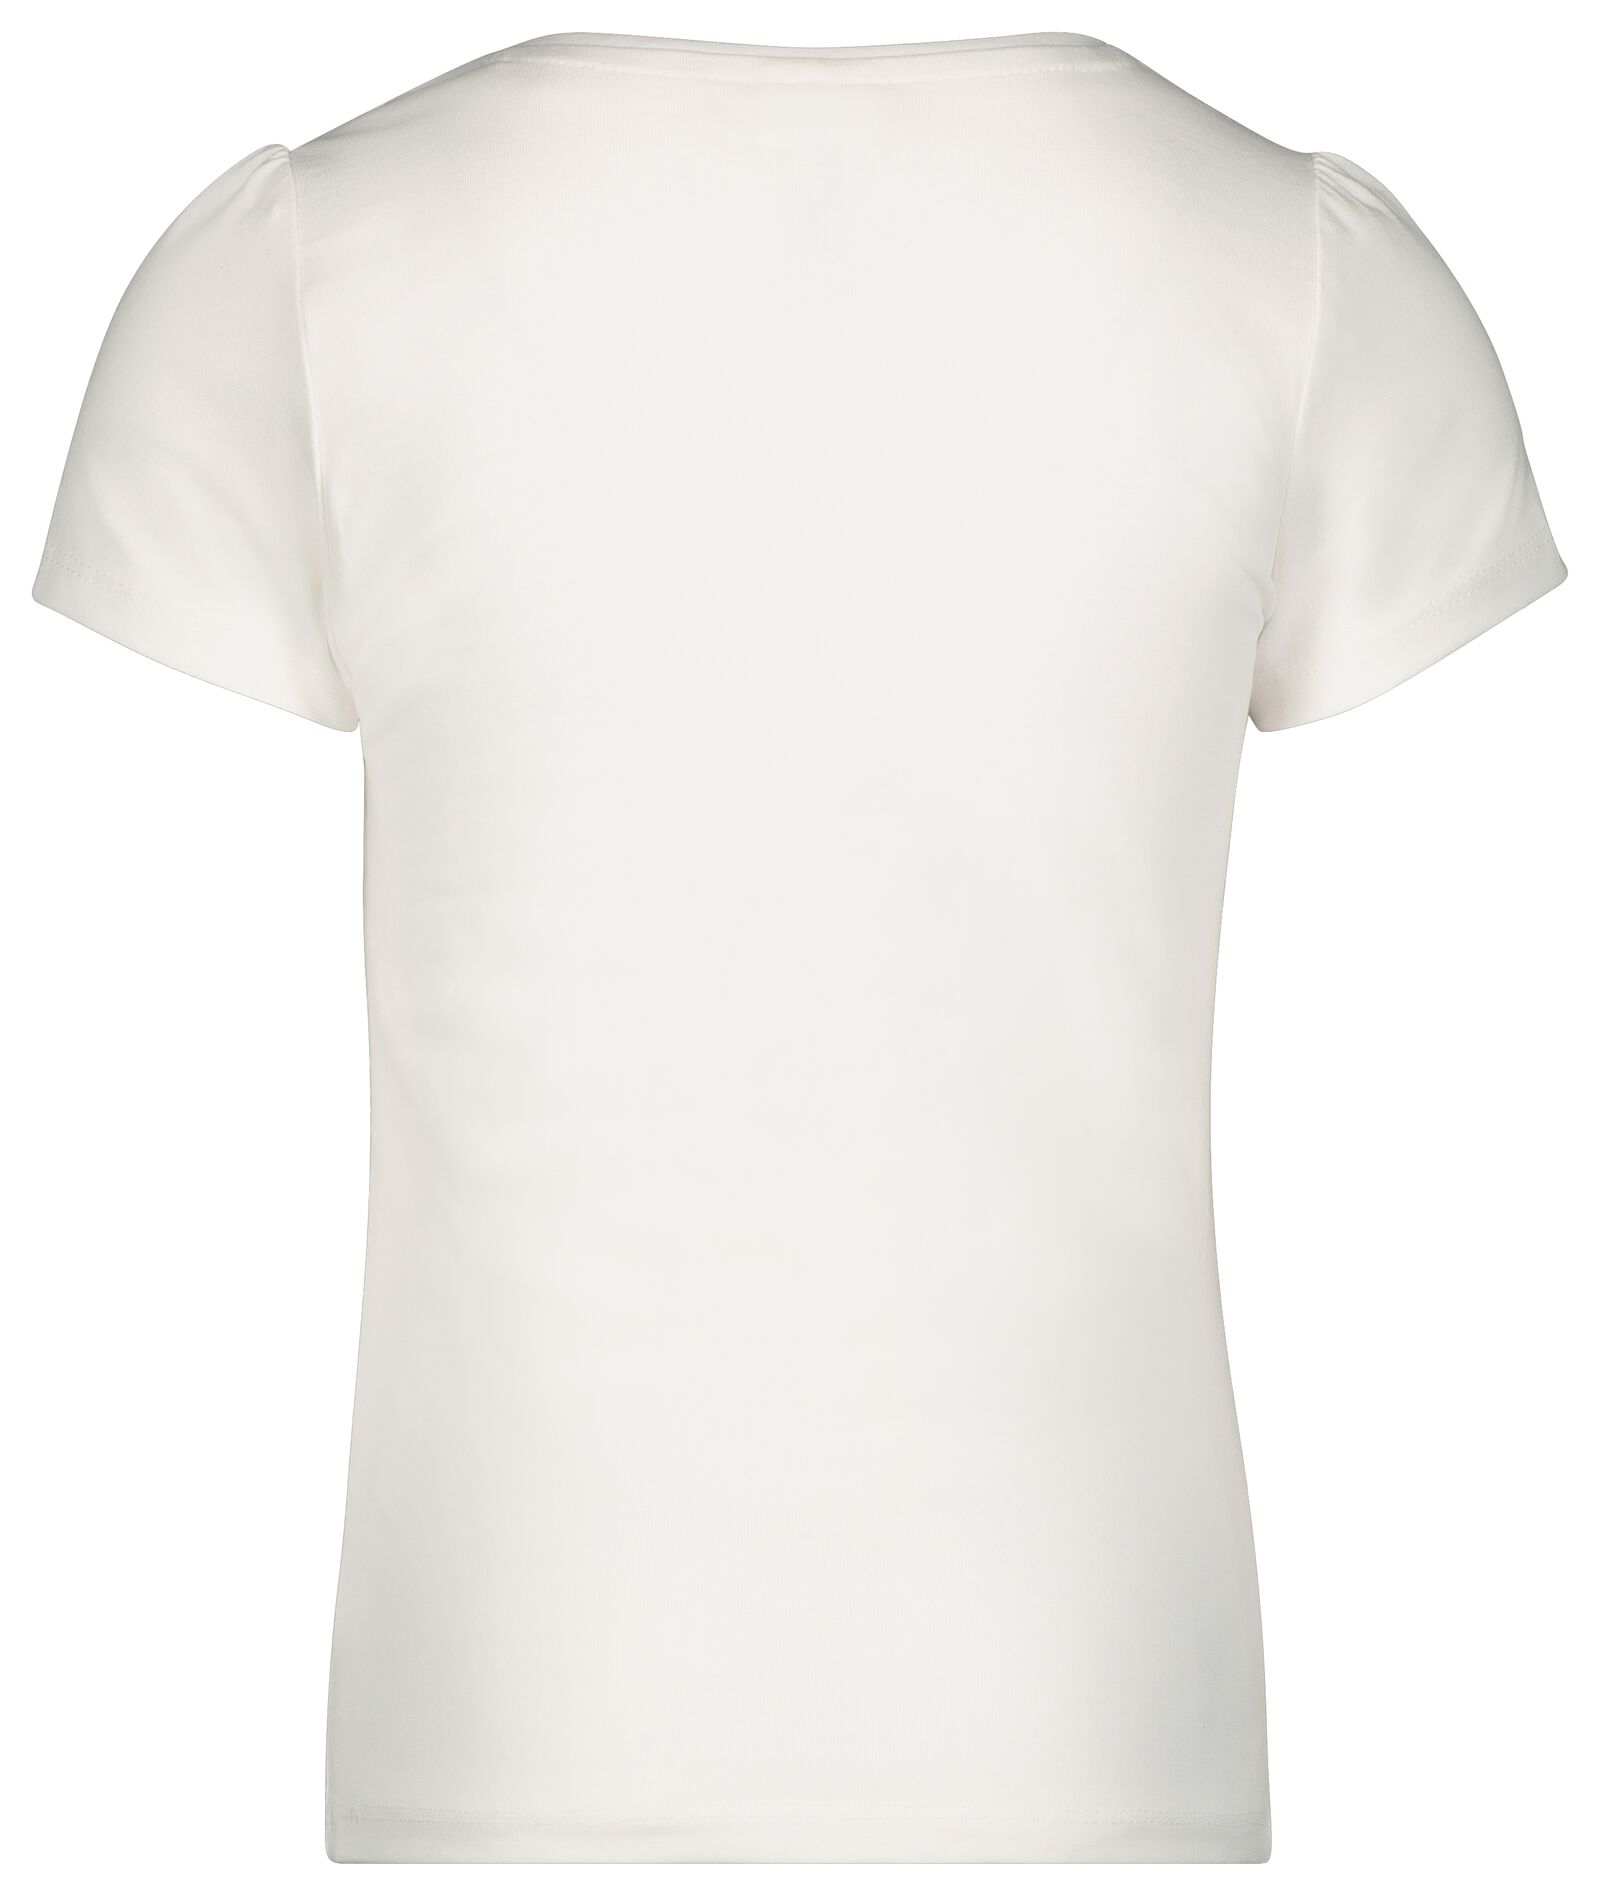 kinder t-shirts - 2 stuks wit 98/104 - 30843931 - HEMA